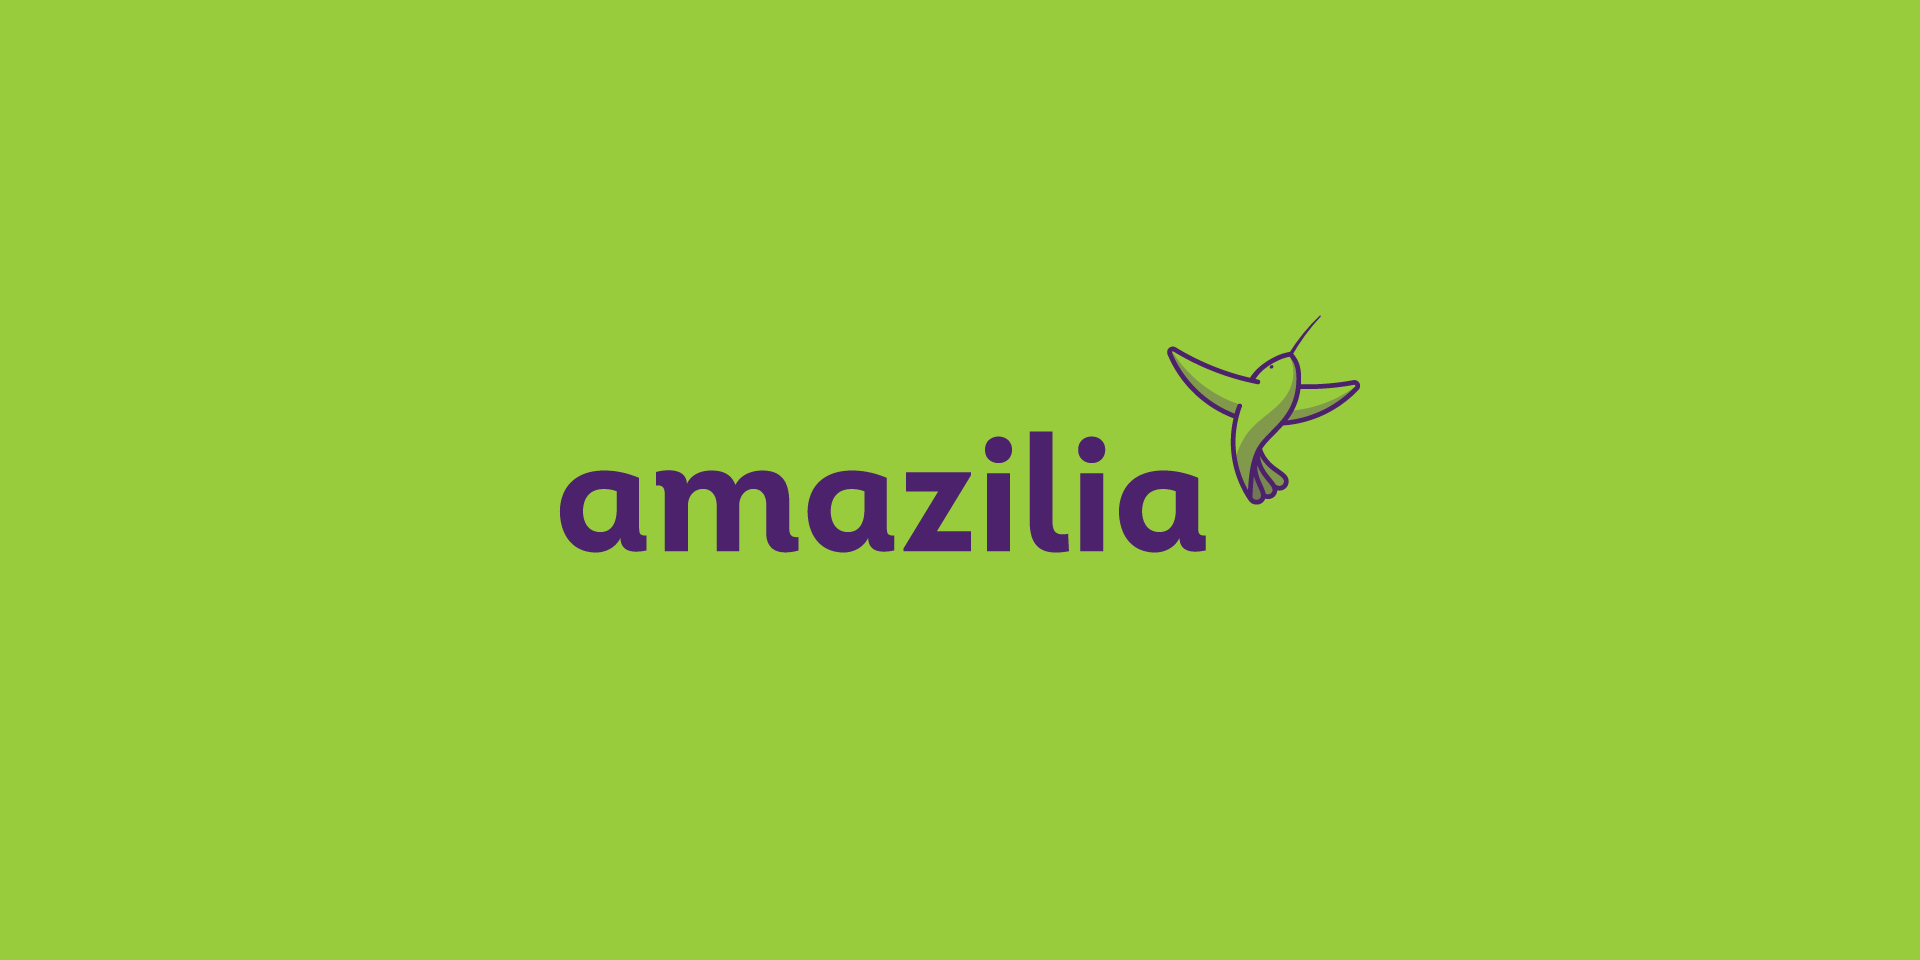 Amazilia logo